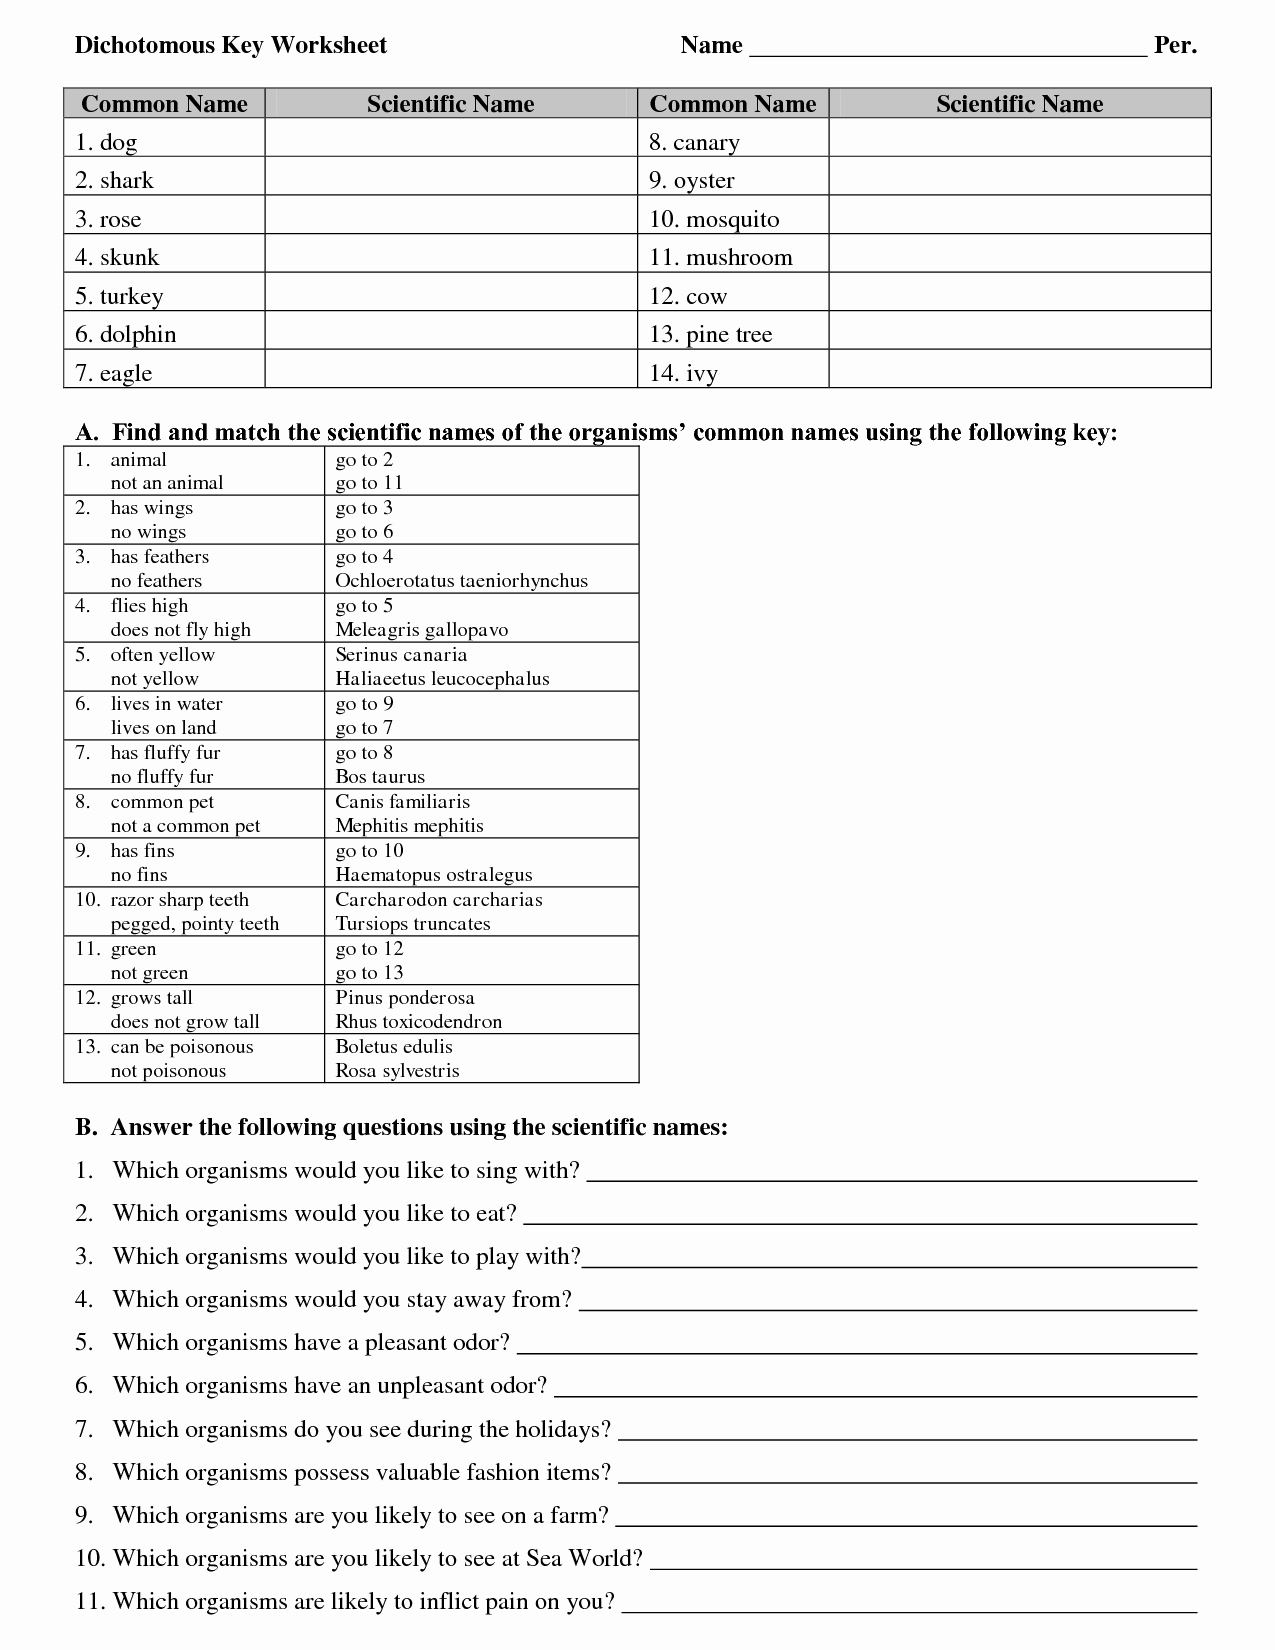 Dichotomous Key Worksheet Pdf Inspirational 13 Best Of Dichotomous Key Worksheets Leaf